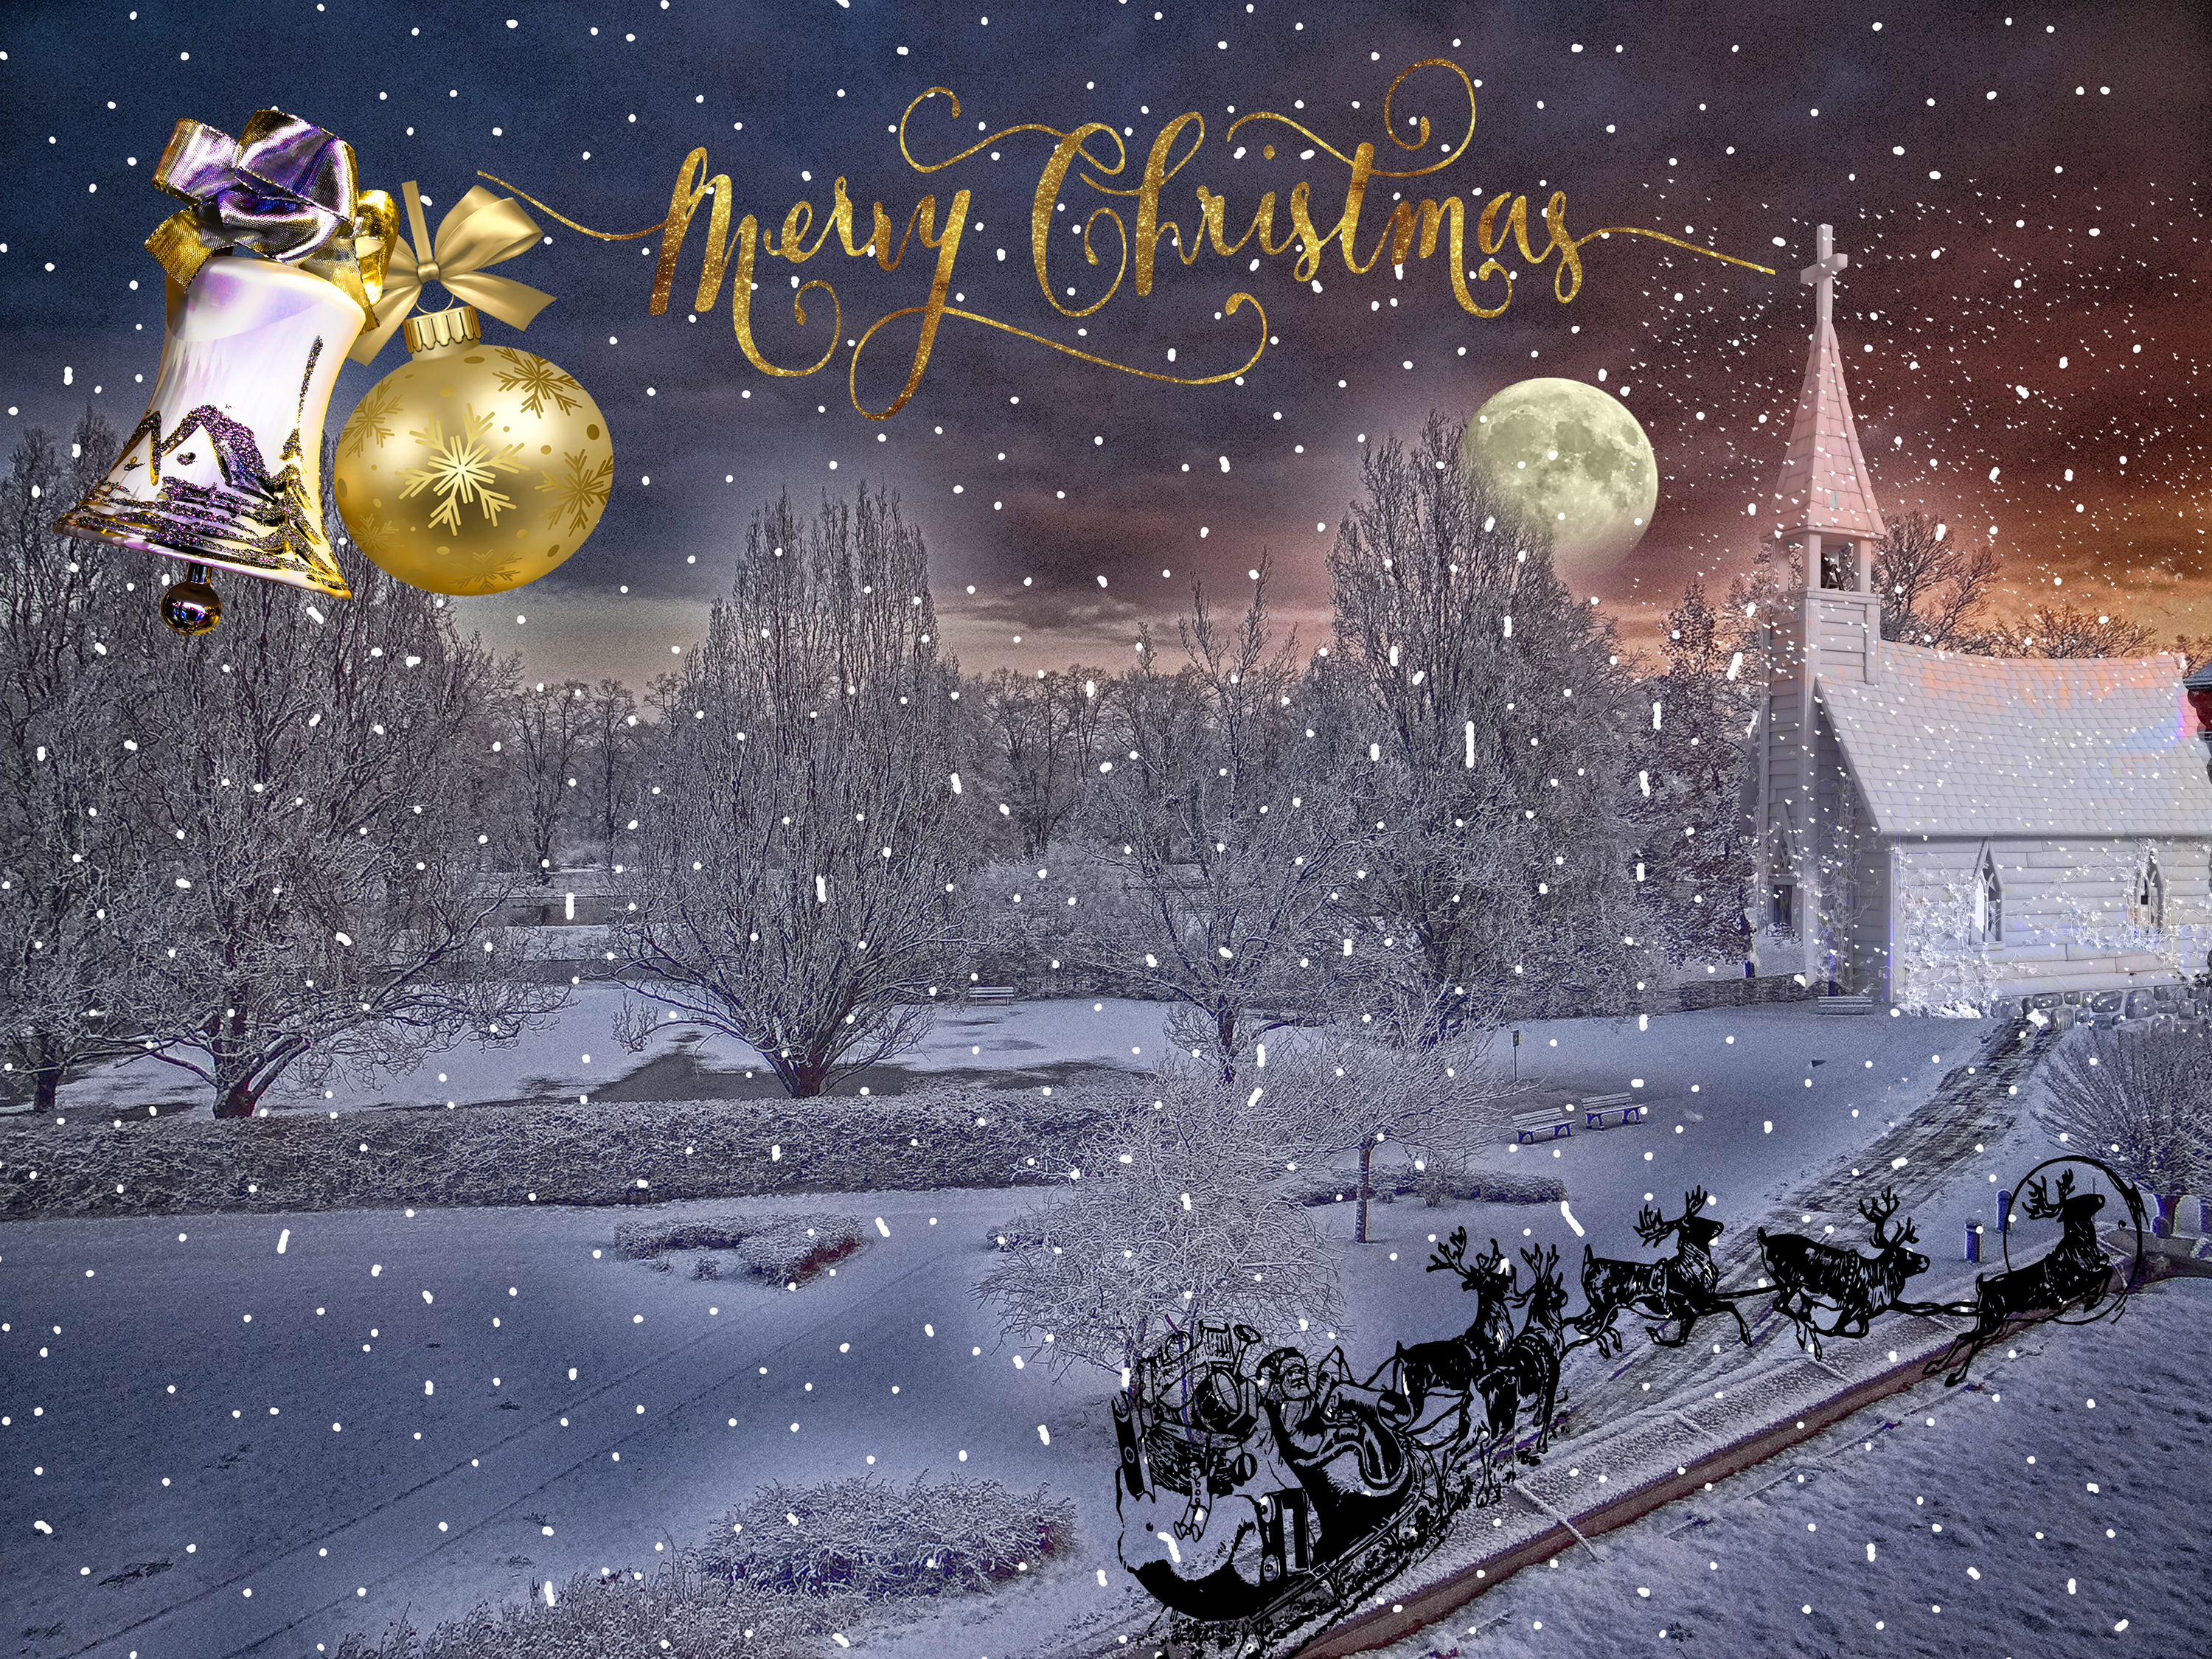 moon, merry christmas, holiday, christmas, bauble, bell, church, reindeer, sled, snow, winter QHD